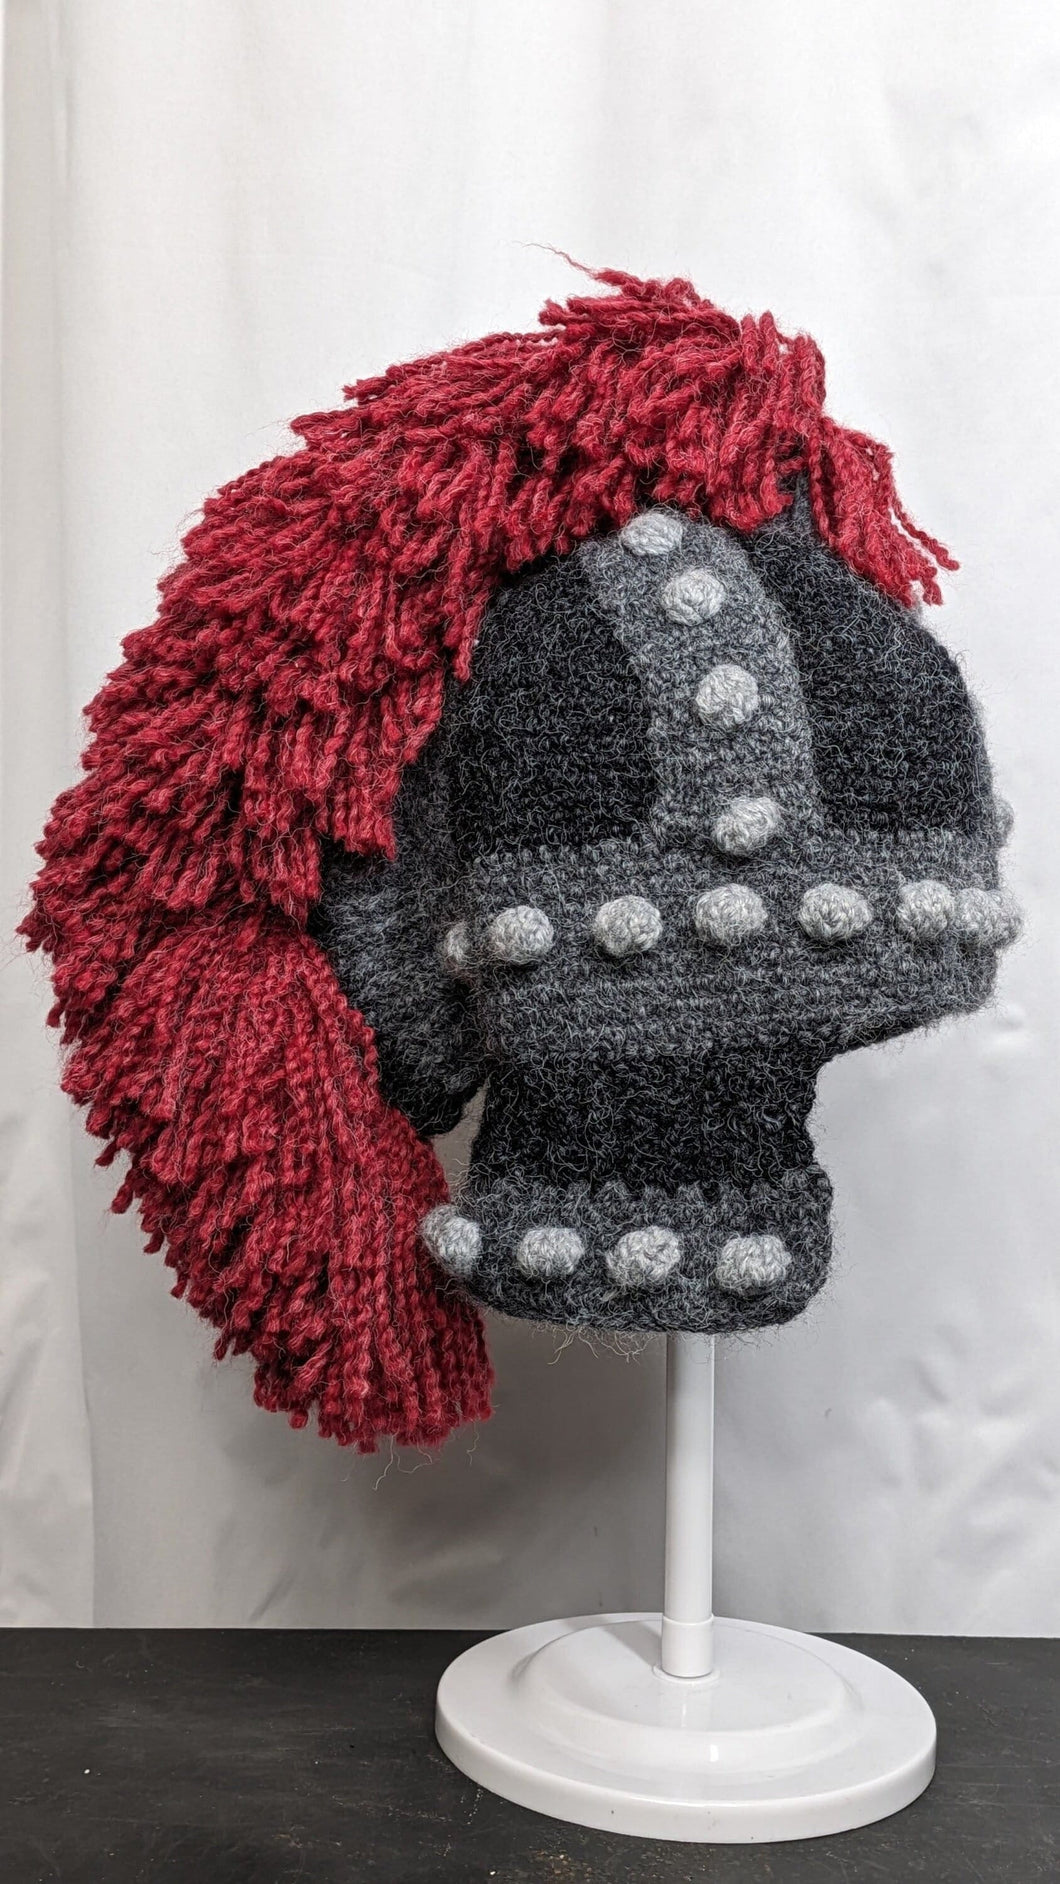 Mohawk fringed roman helmet ski snowboard knit winter novelty rare hat adult unisex unique gift